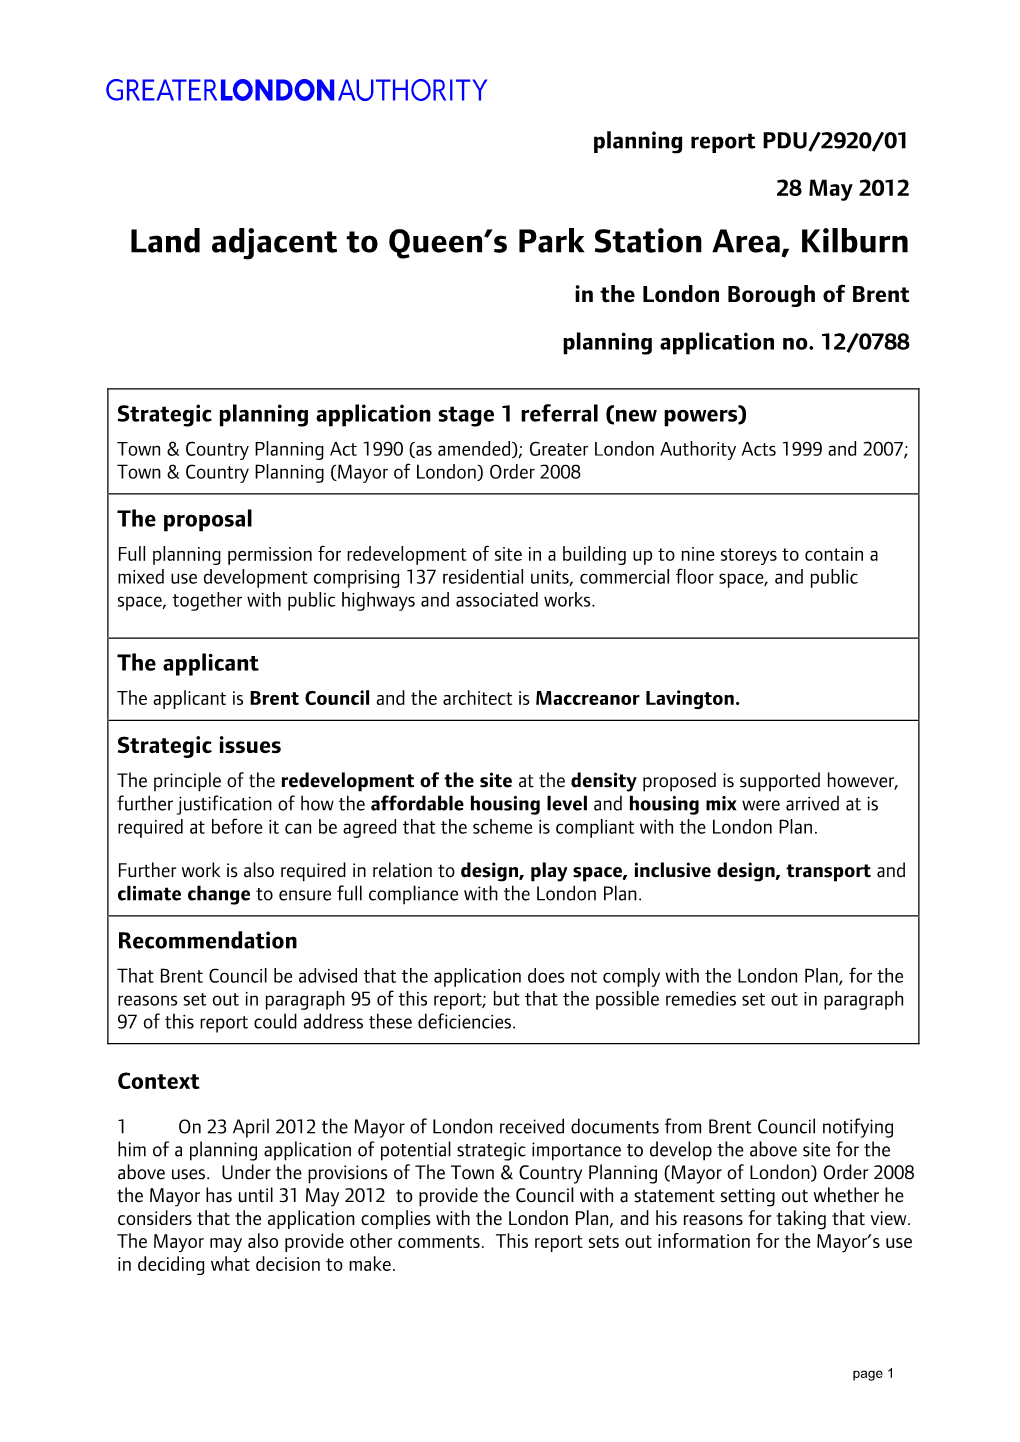 Land Adjacent to Queen's Park Station Area, Kilburn